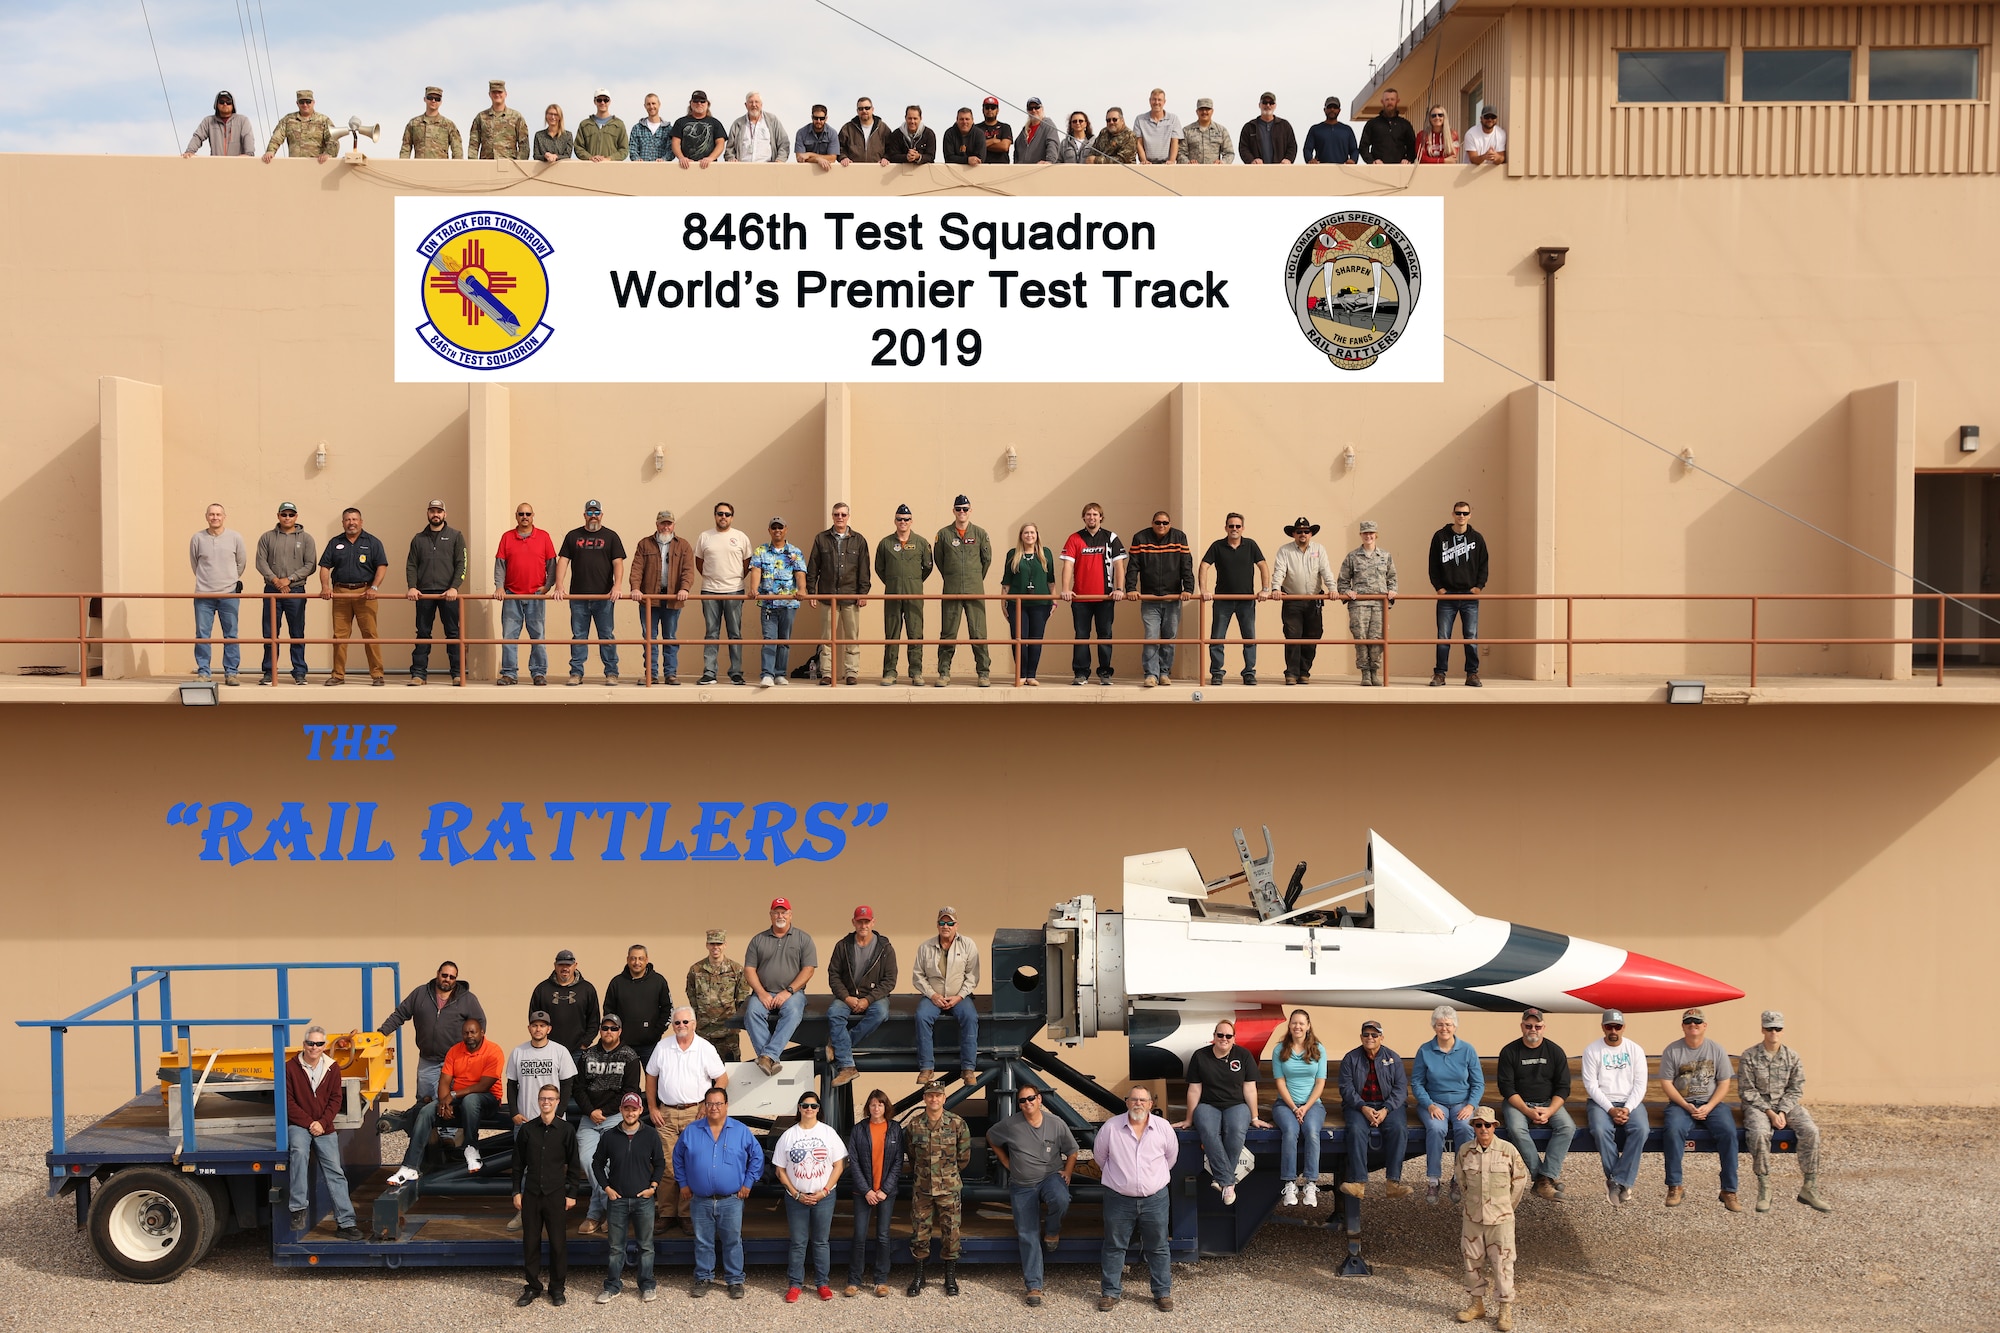 846th Test Squadron world's premier test track